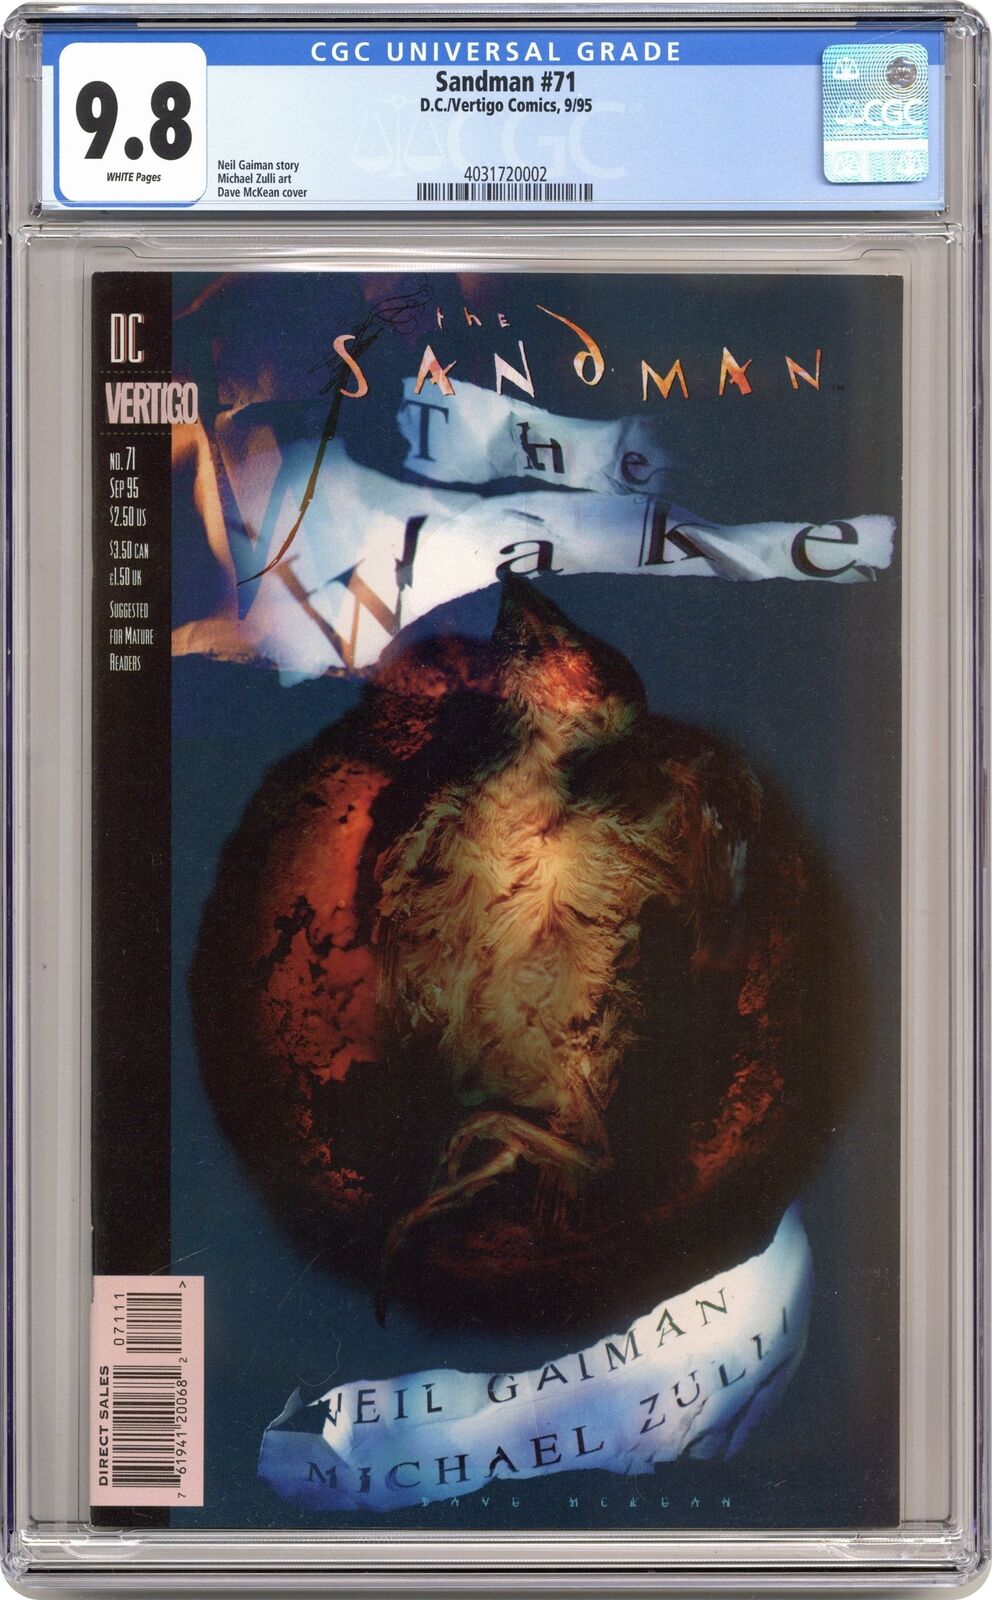 Sandman #71 CGC 9.8 1995 4031720002